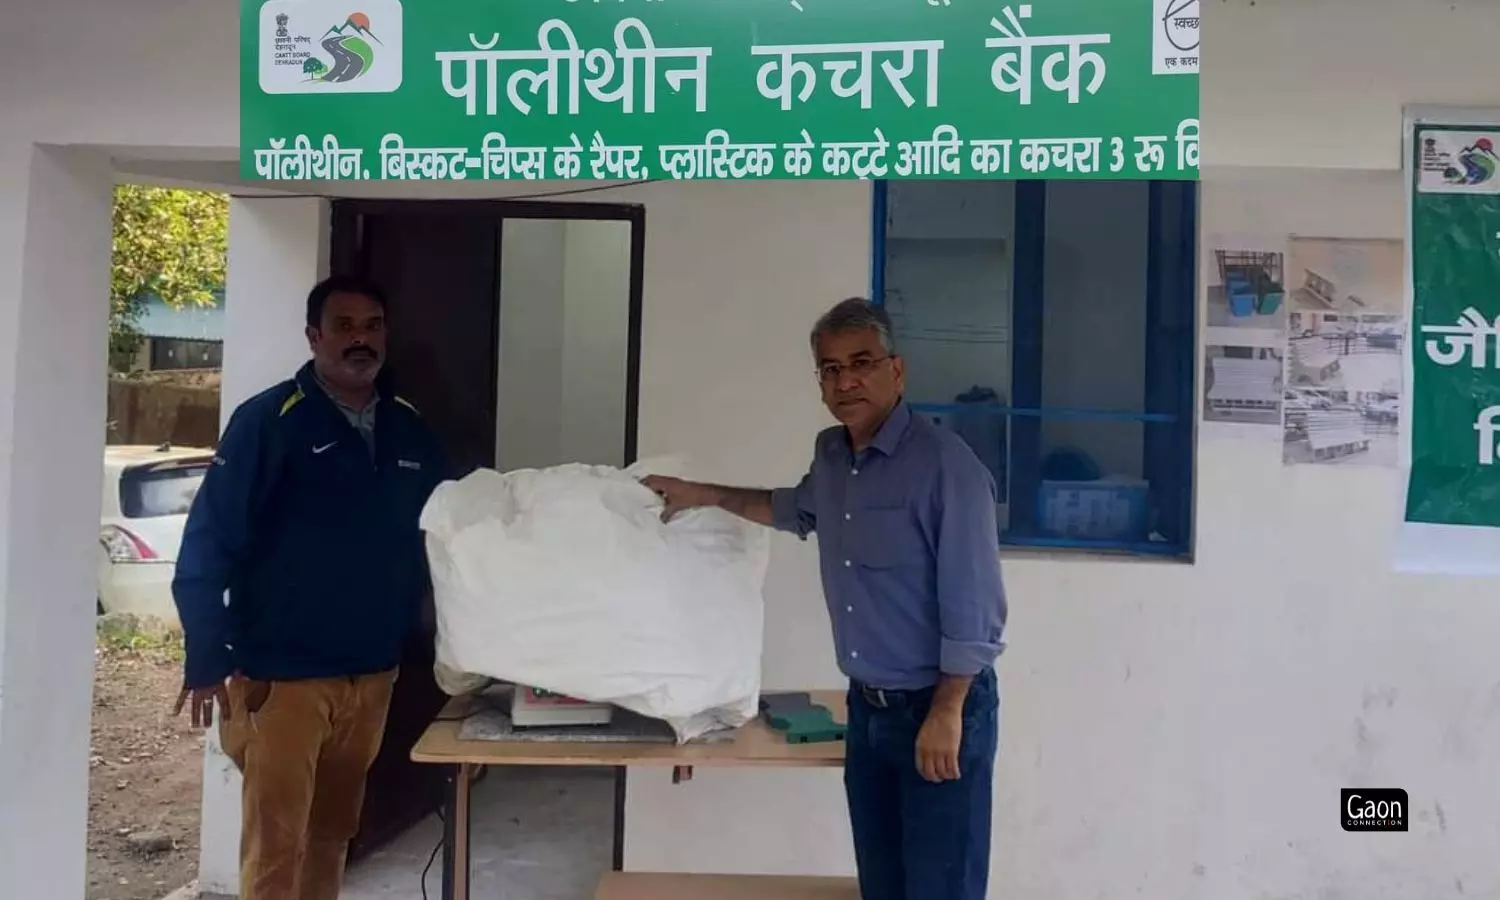 A Garbage Bank To Tackle Plastic Waste In Dehradun